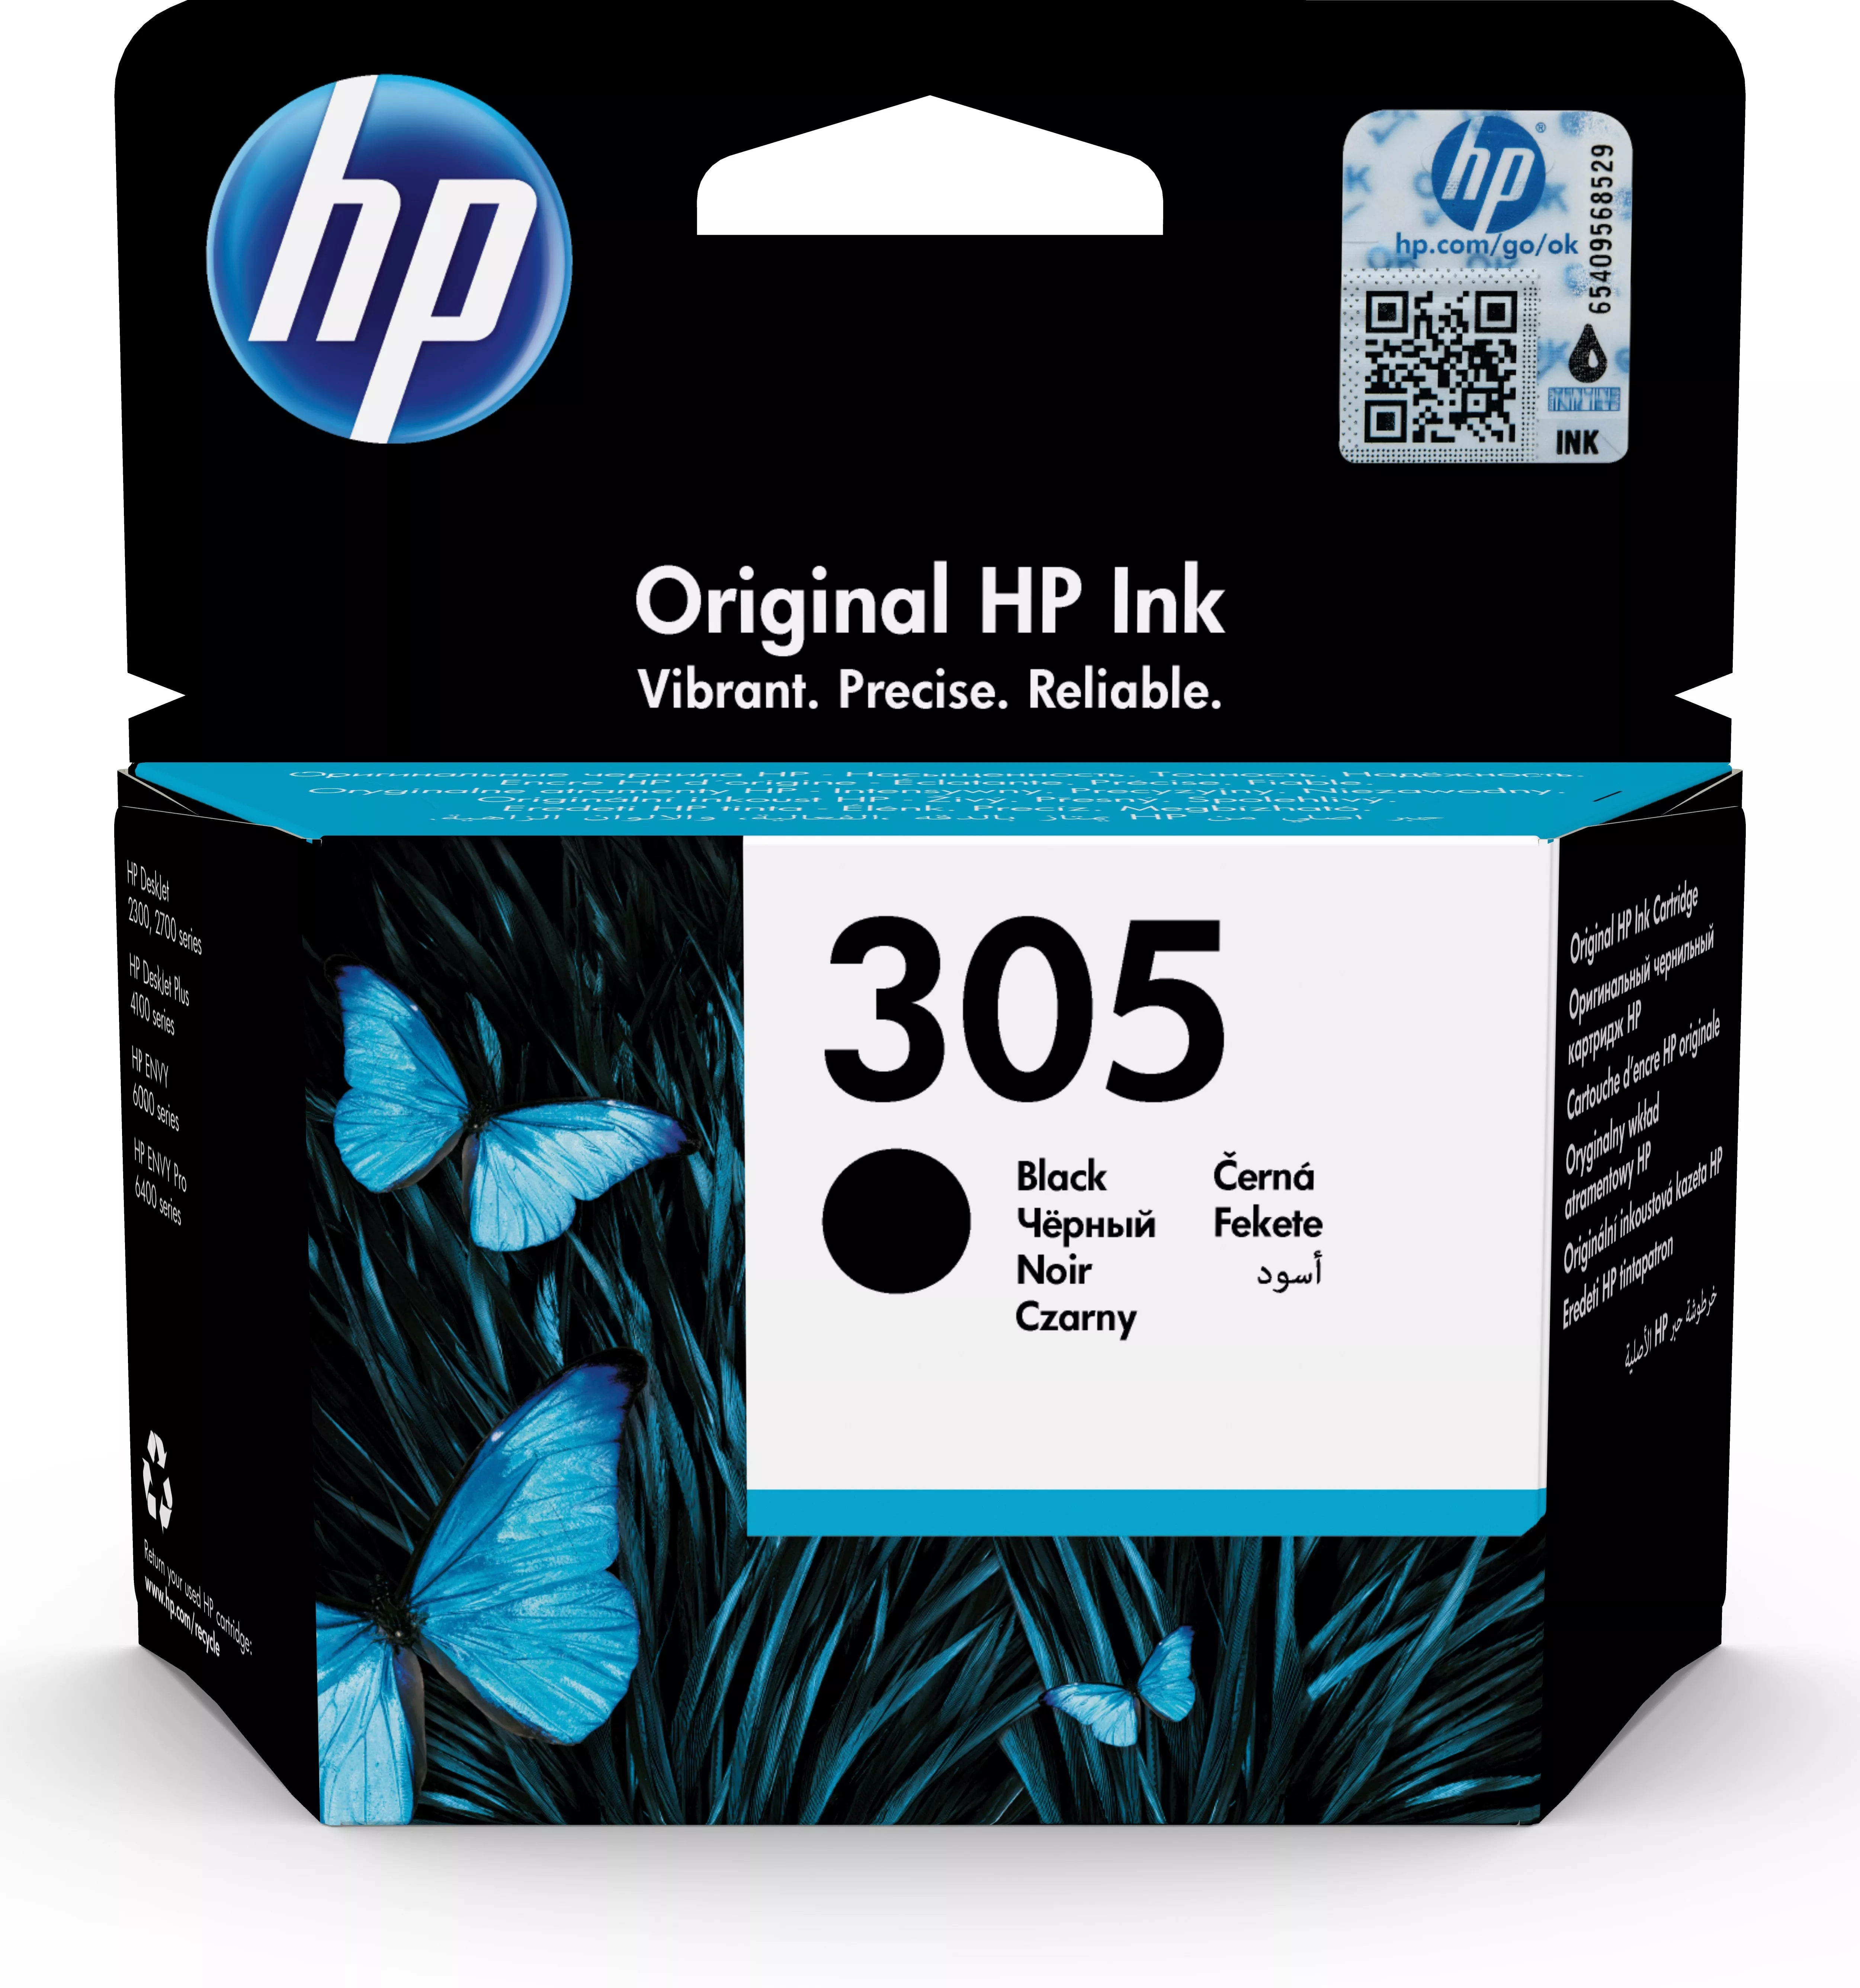 Revendeur officiel HP 305 Black Original Ink Cartridge